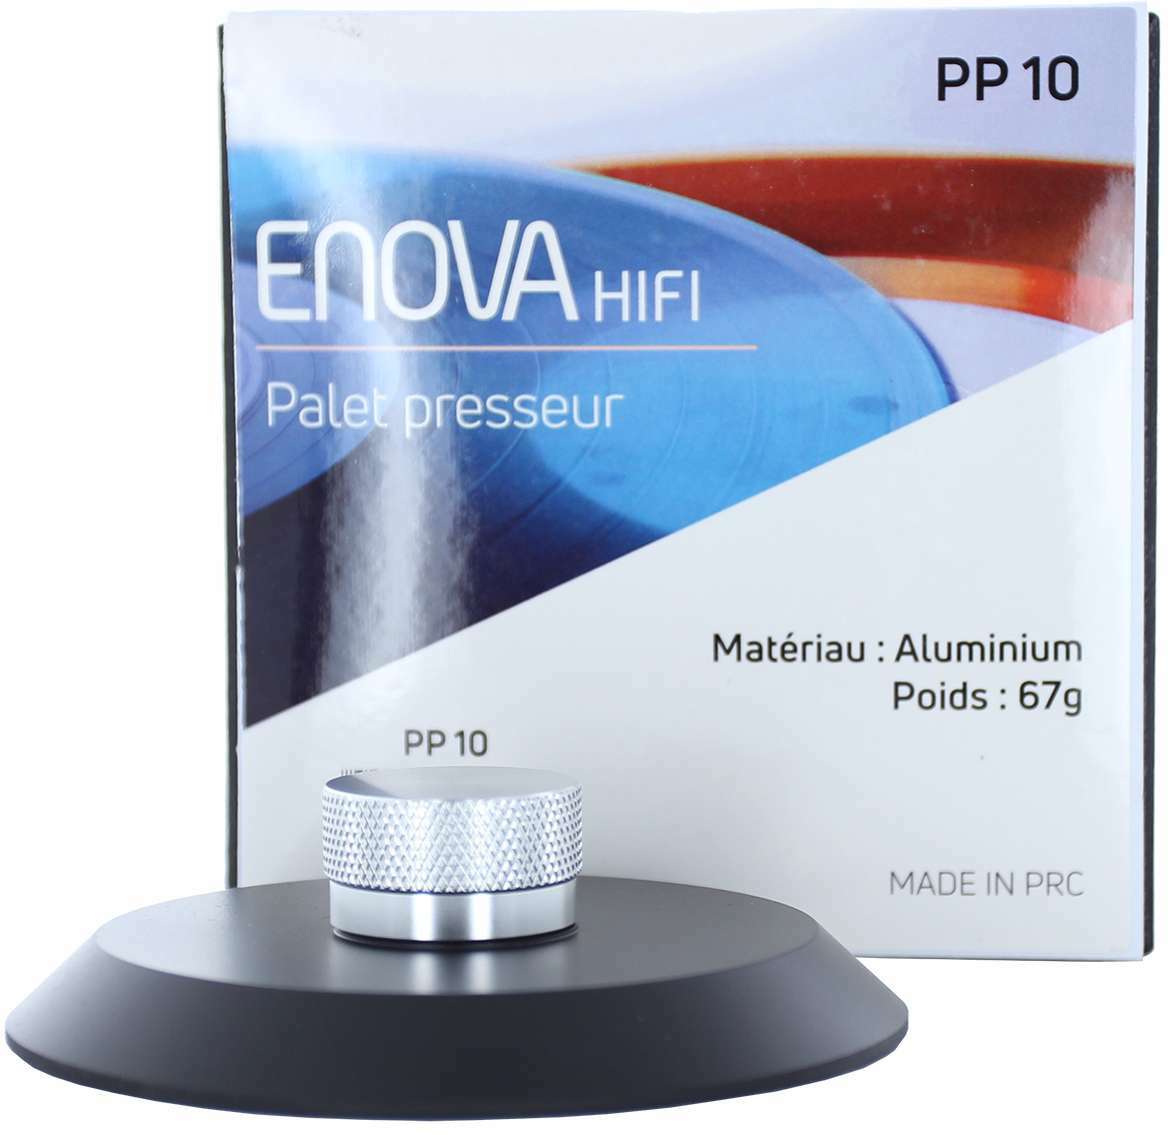 Enova Hifi Palet Presseur - Pp 10 - Other accessories - Main picture